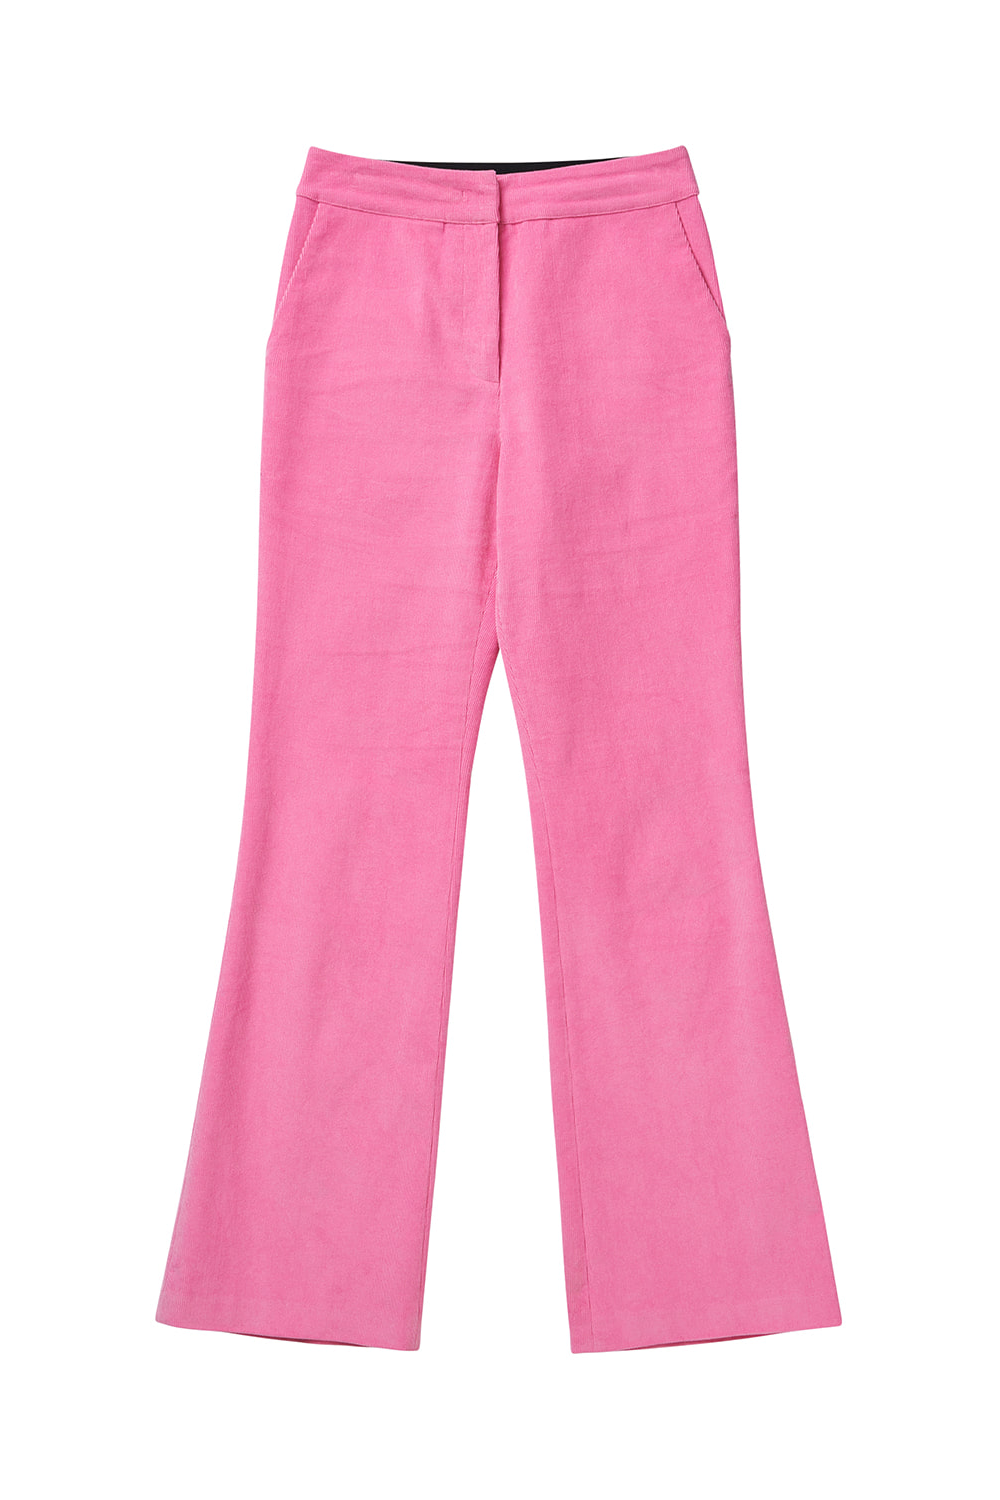 LaLa Corduroy Pants [Pink]